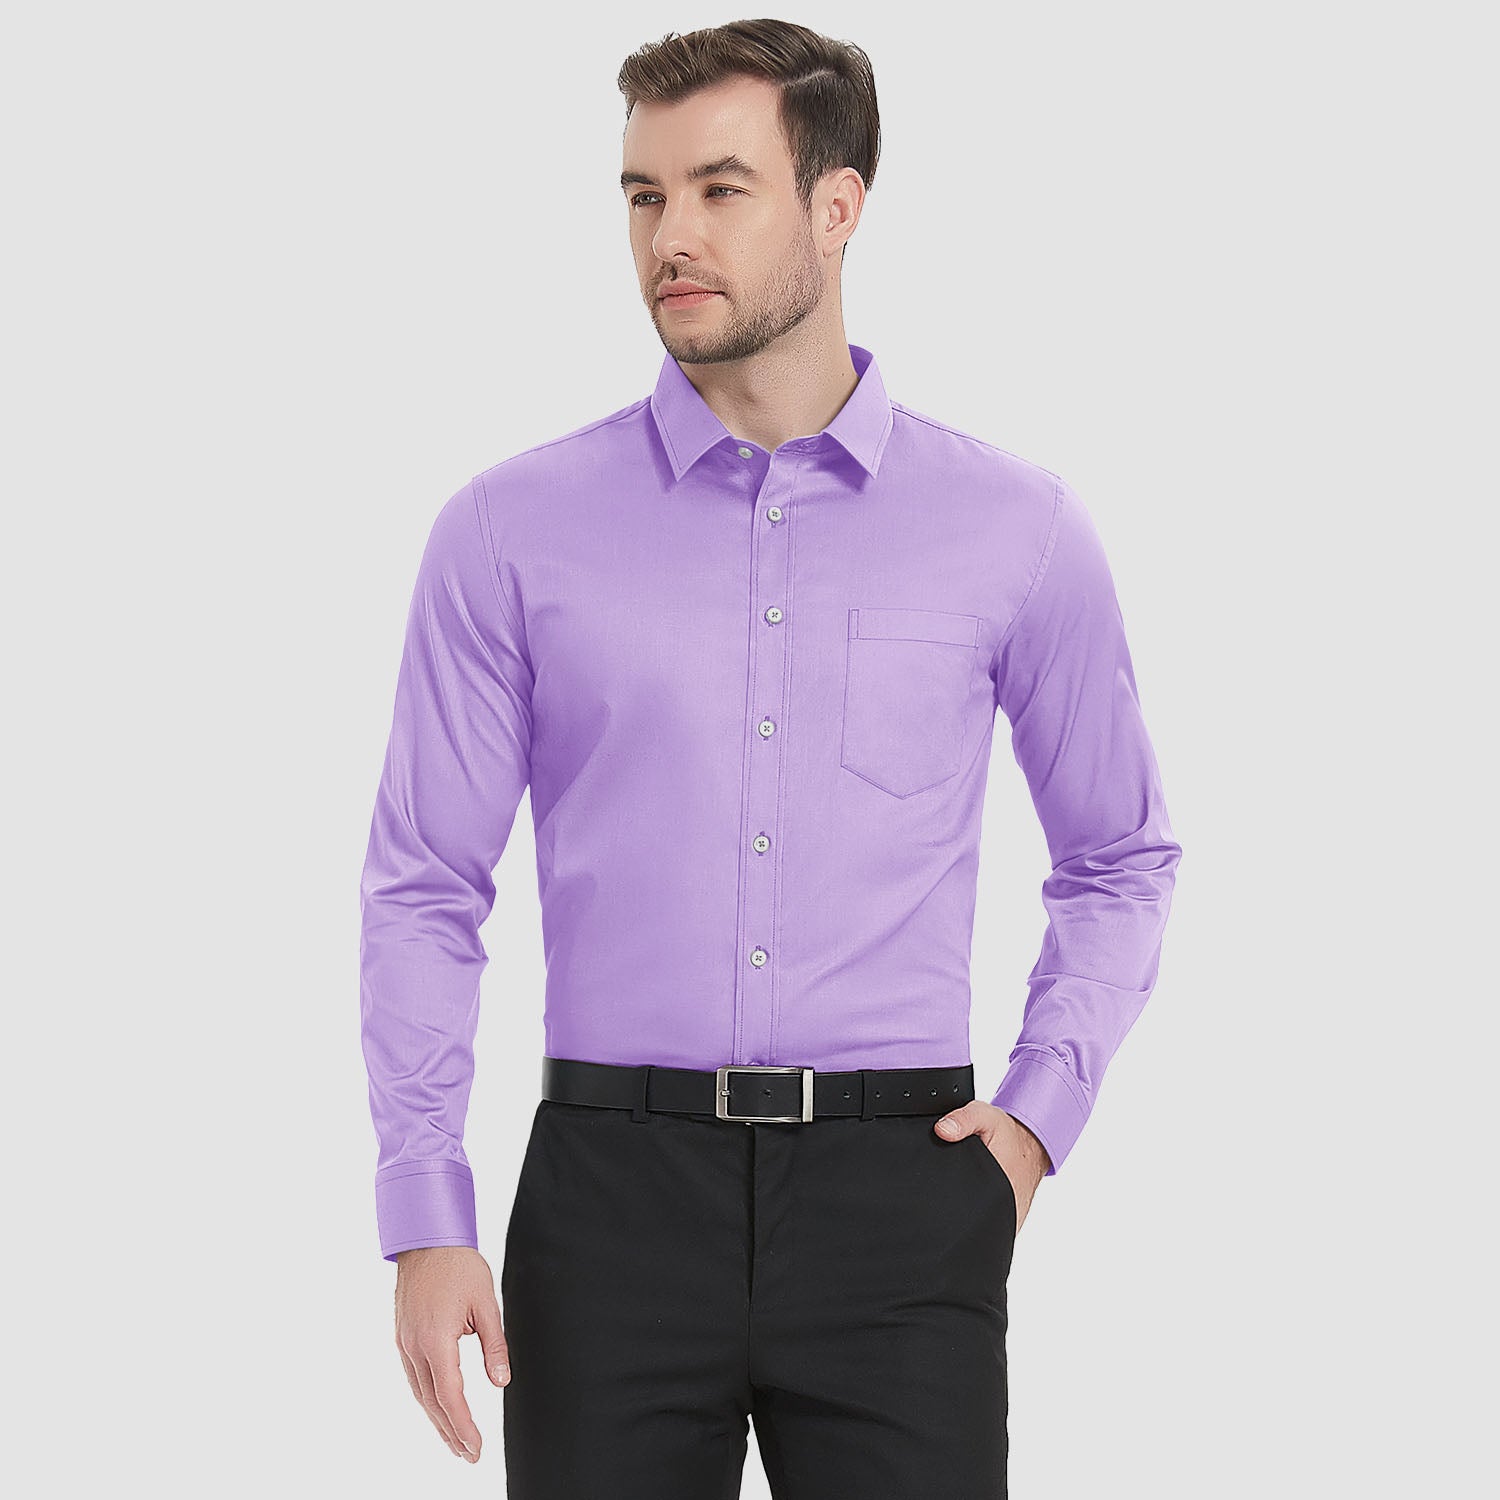 Men's Long Sleeve Dress Shirts with Pocket Cotton Regular Fit Business Shirt